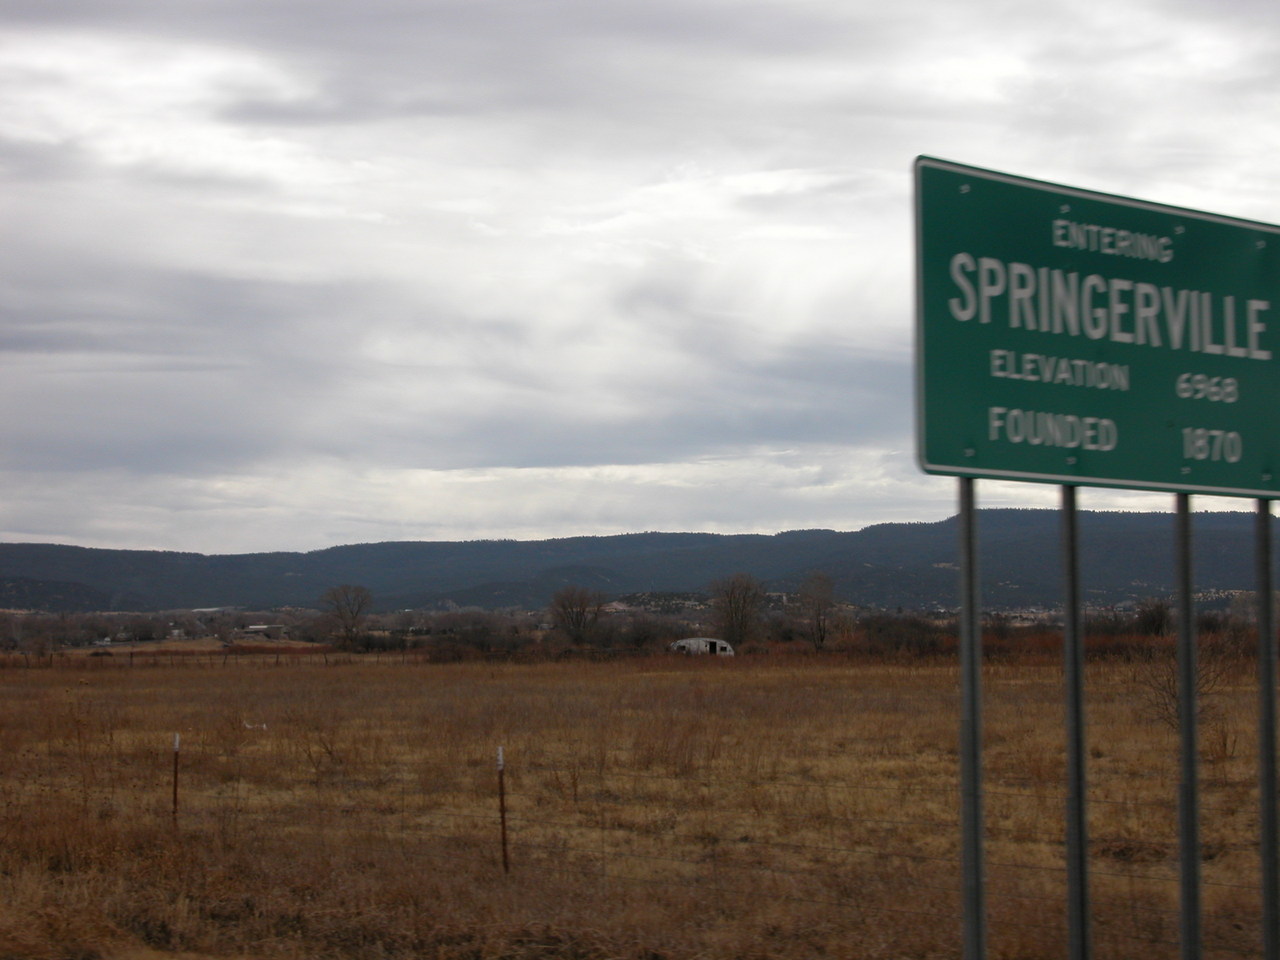 Springerville, AZ: springerville, az